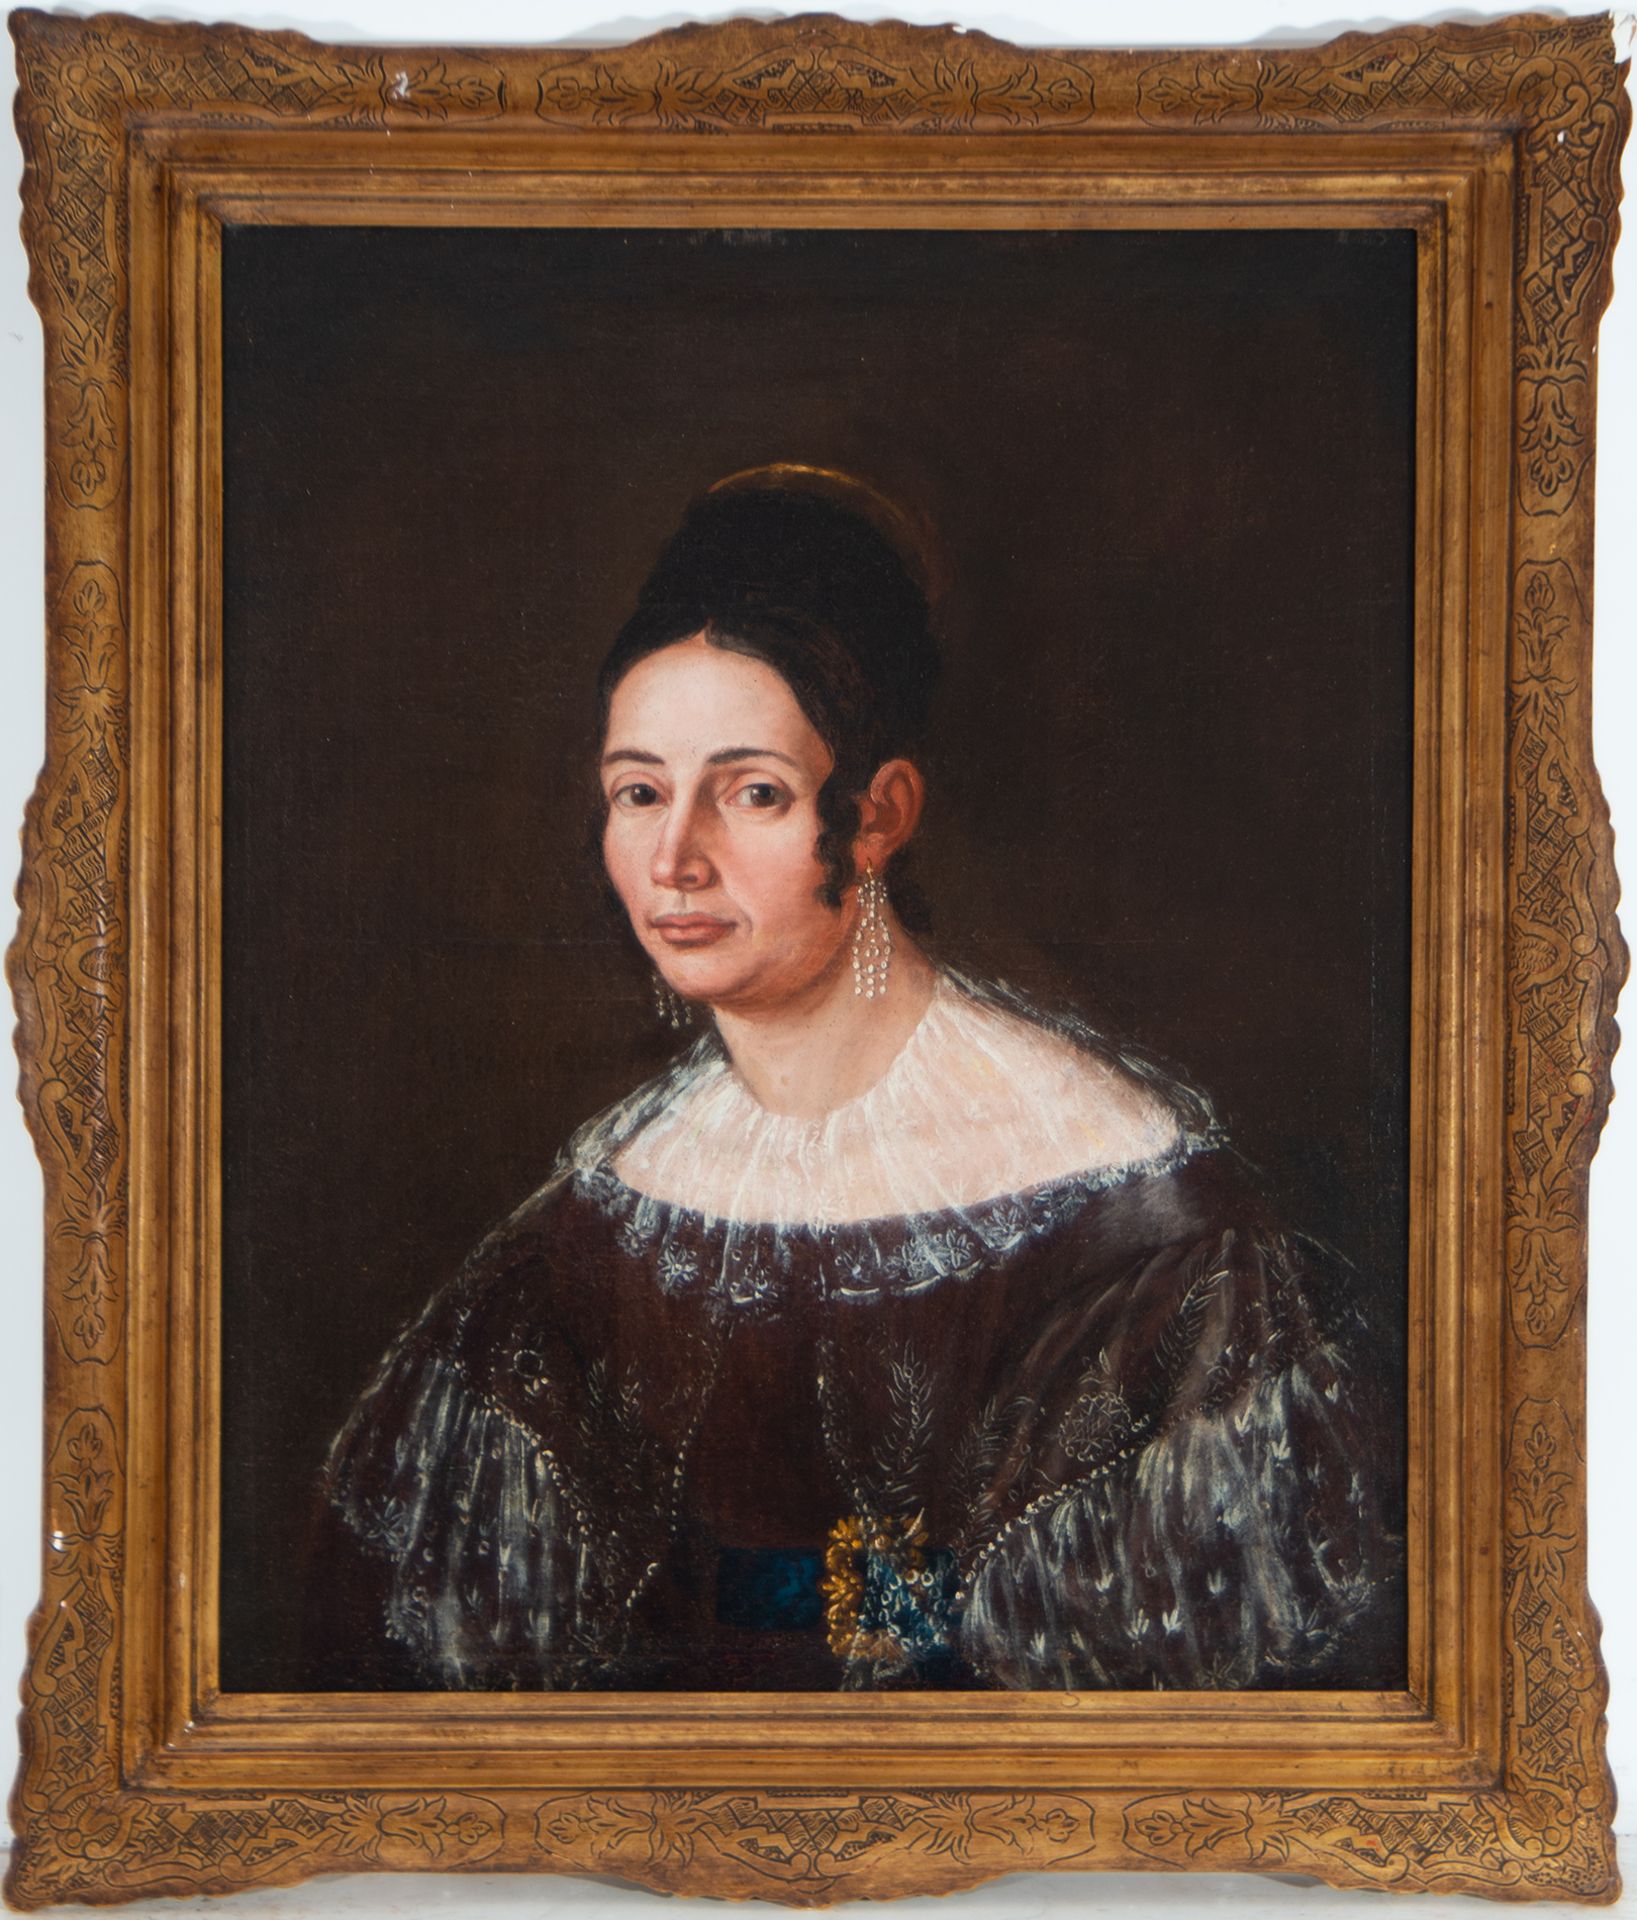 Lady portrait, 19th century Spanish school